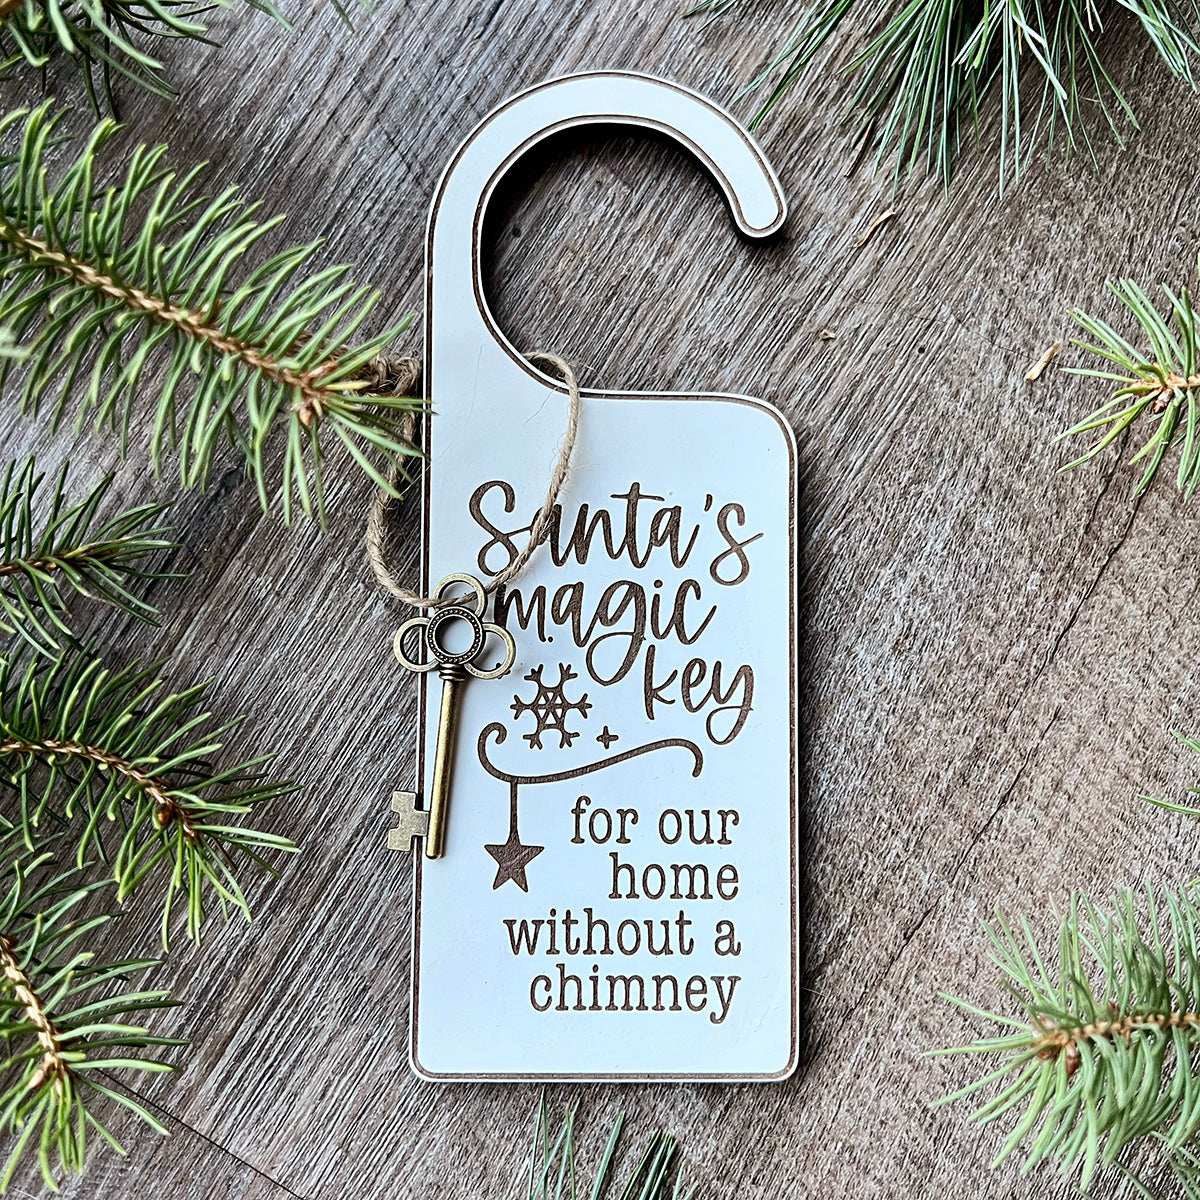 Personalized Santa Key, Magic Santa Key